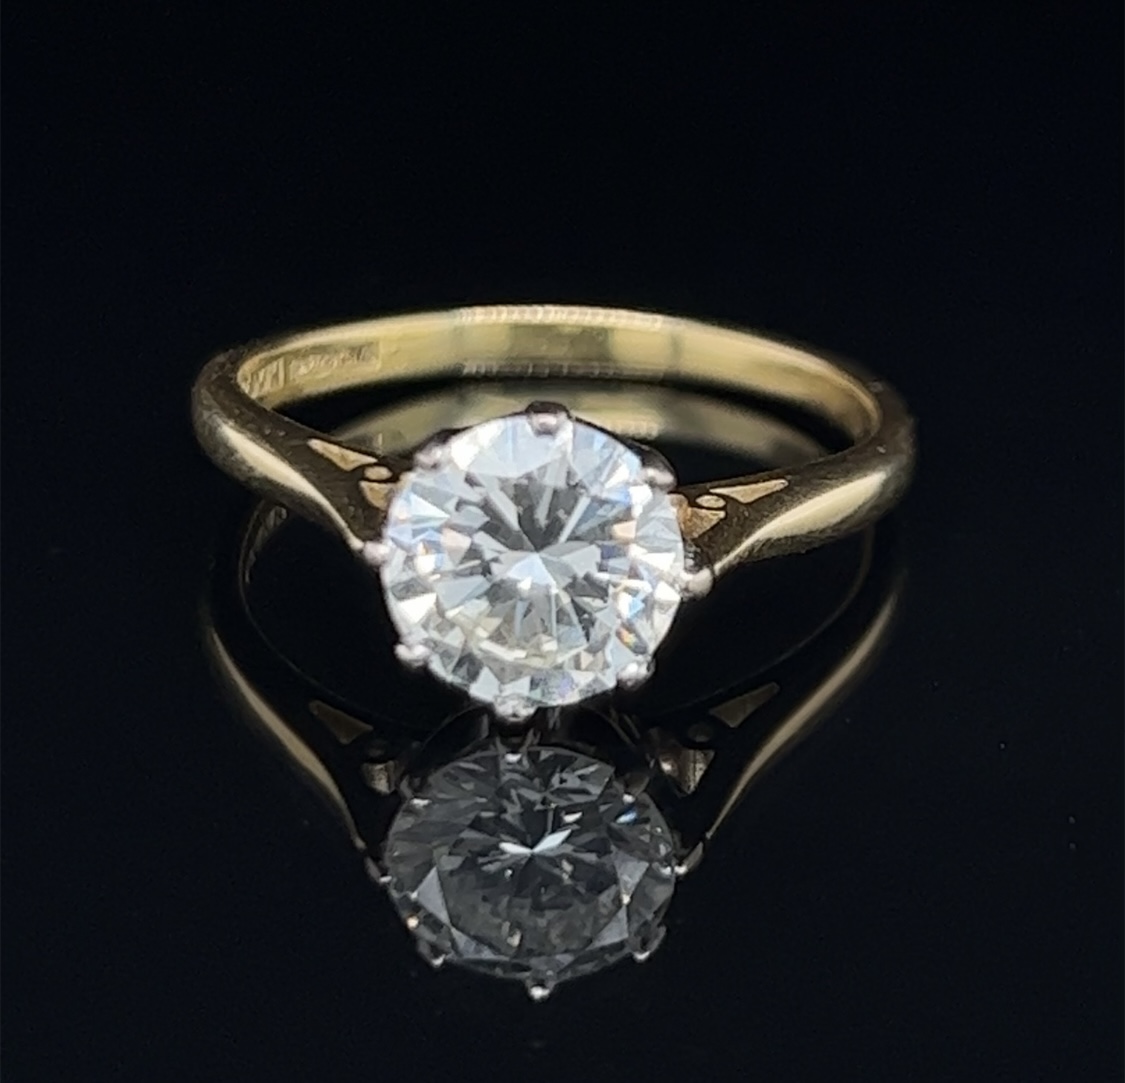 Diamond Solitare Ring 18 Carat, Yellow Gold, 1.7ct VVS